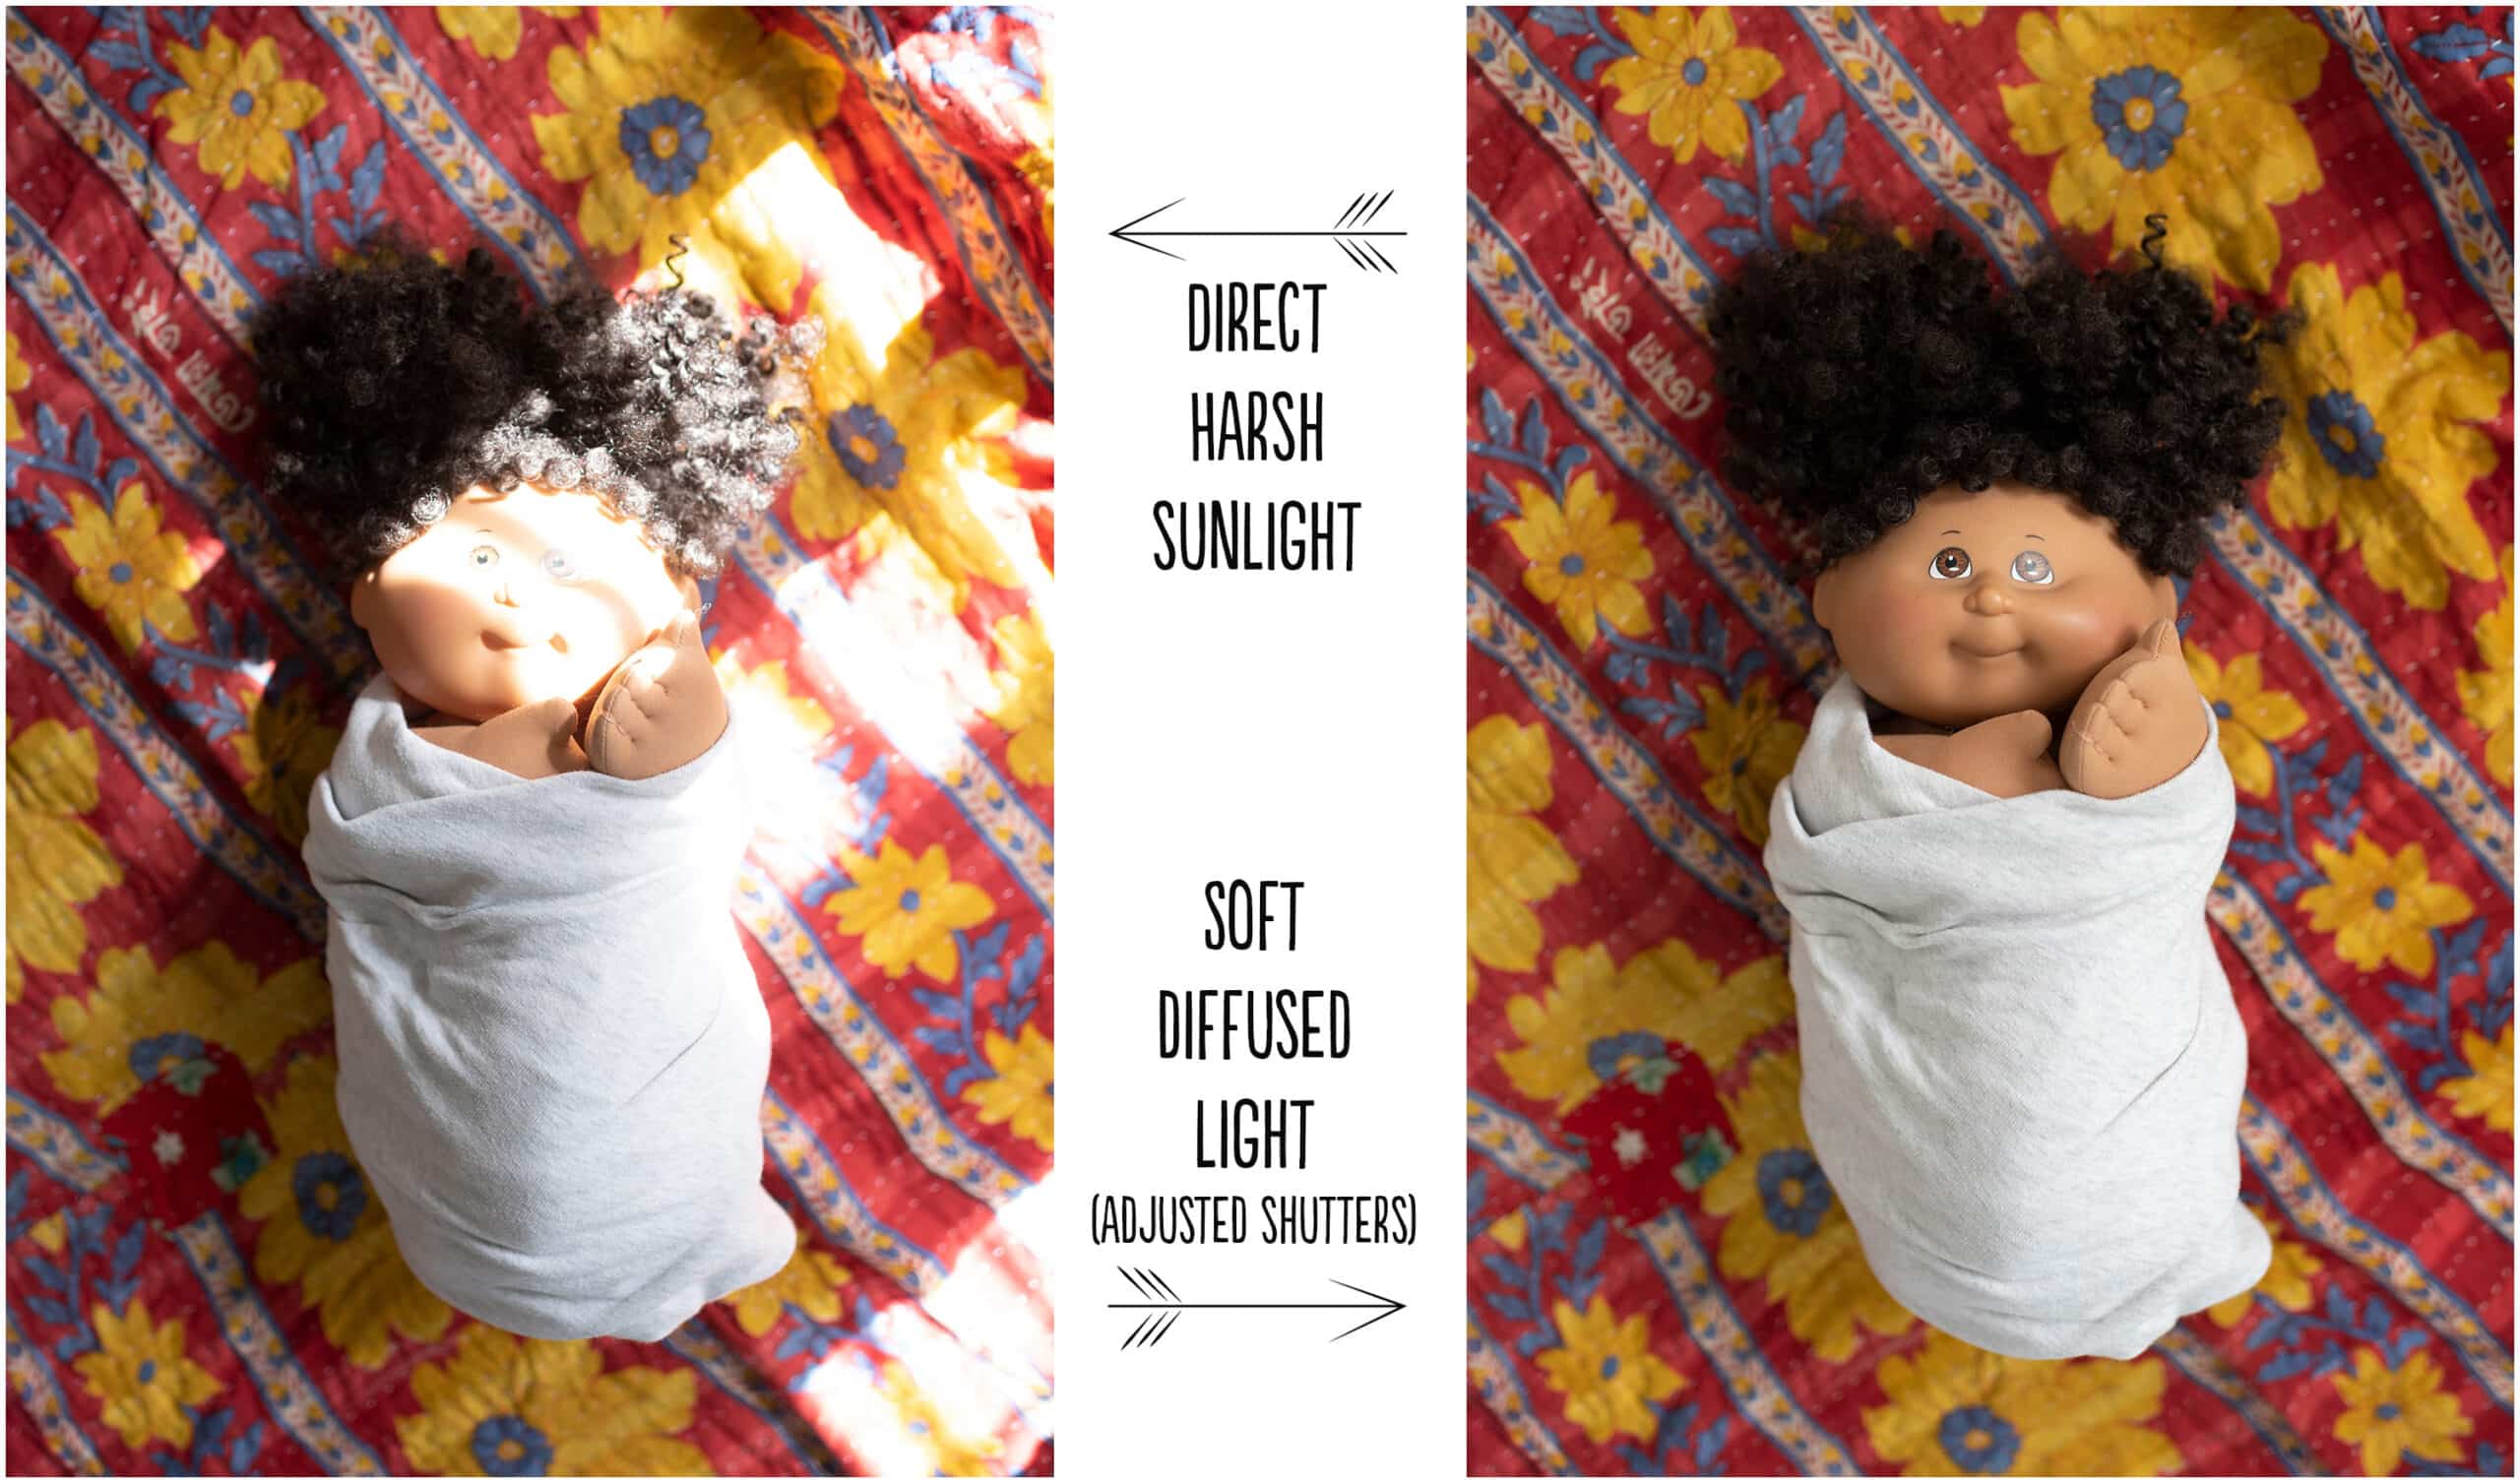 comparing bright sun light to soft diffused light